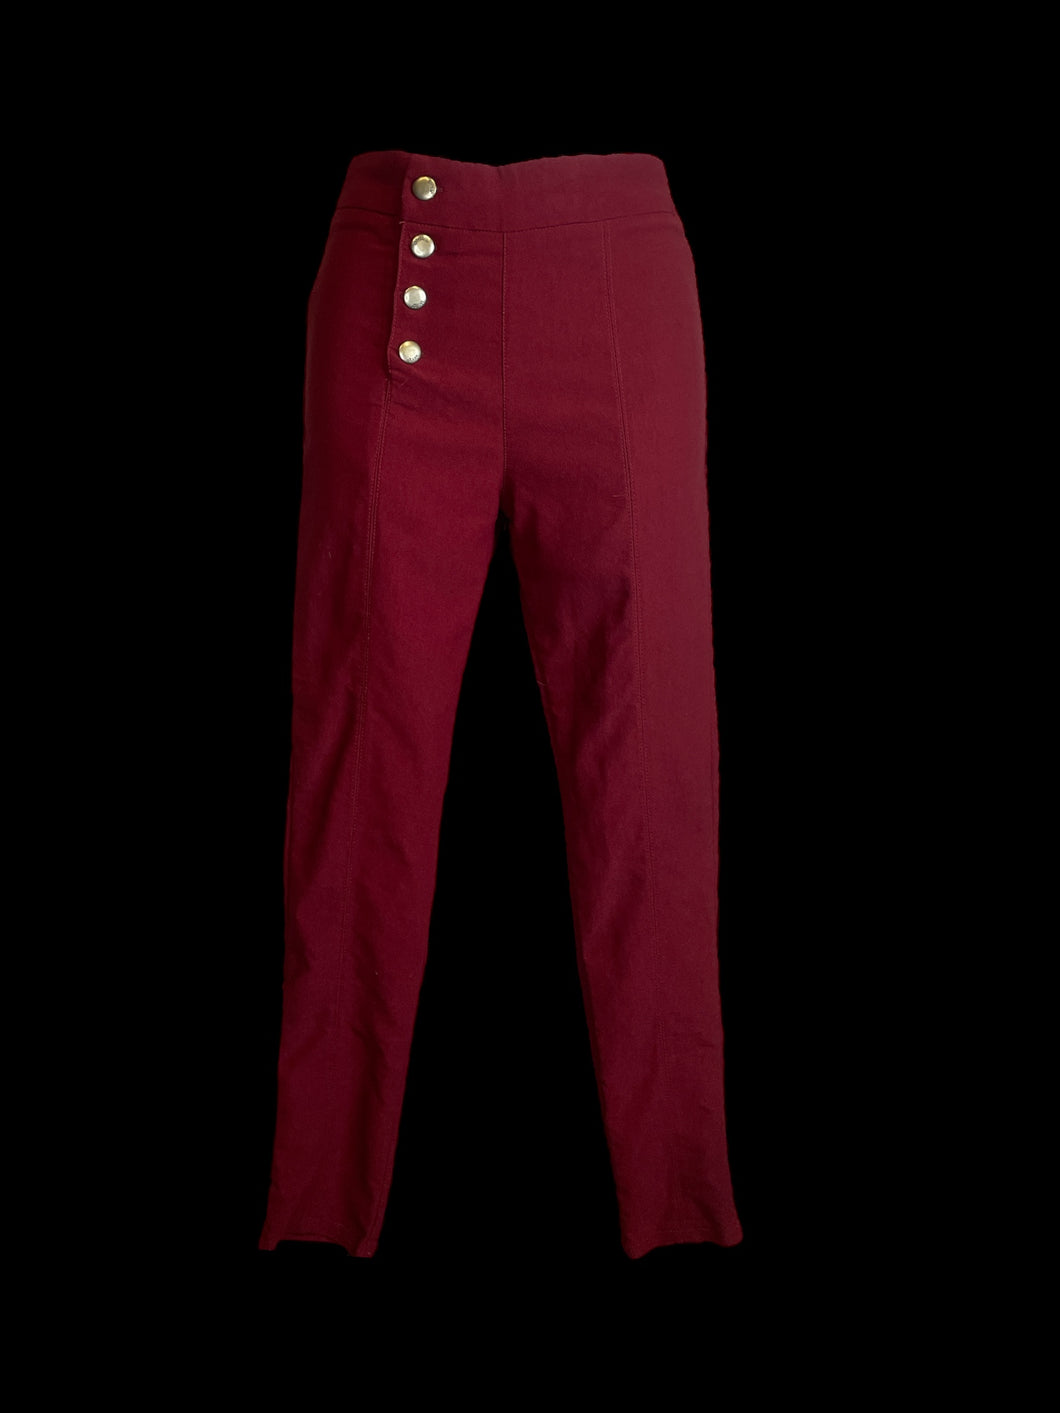 S Dark red high waist taper leg cotton pants w/ asymmetric four button closure, & pockets